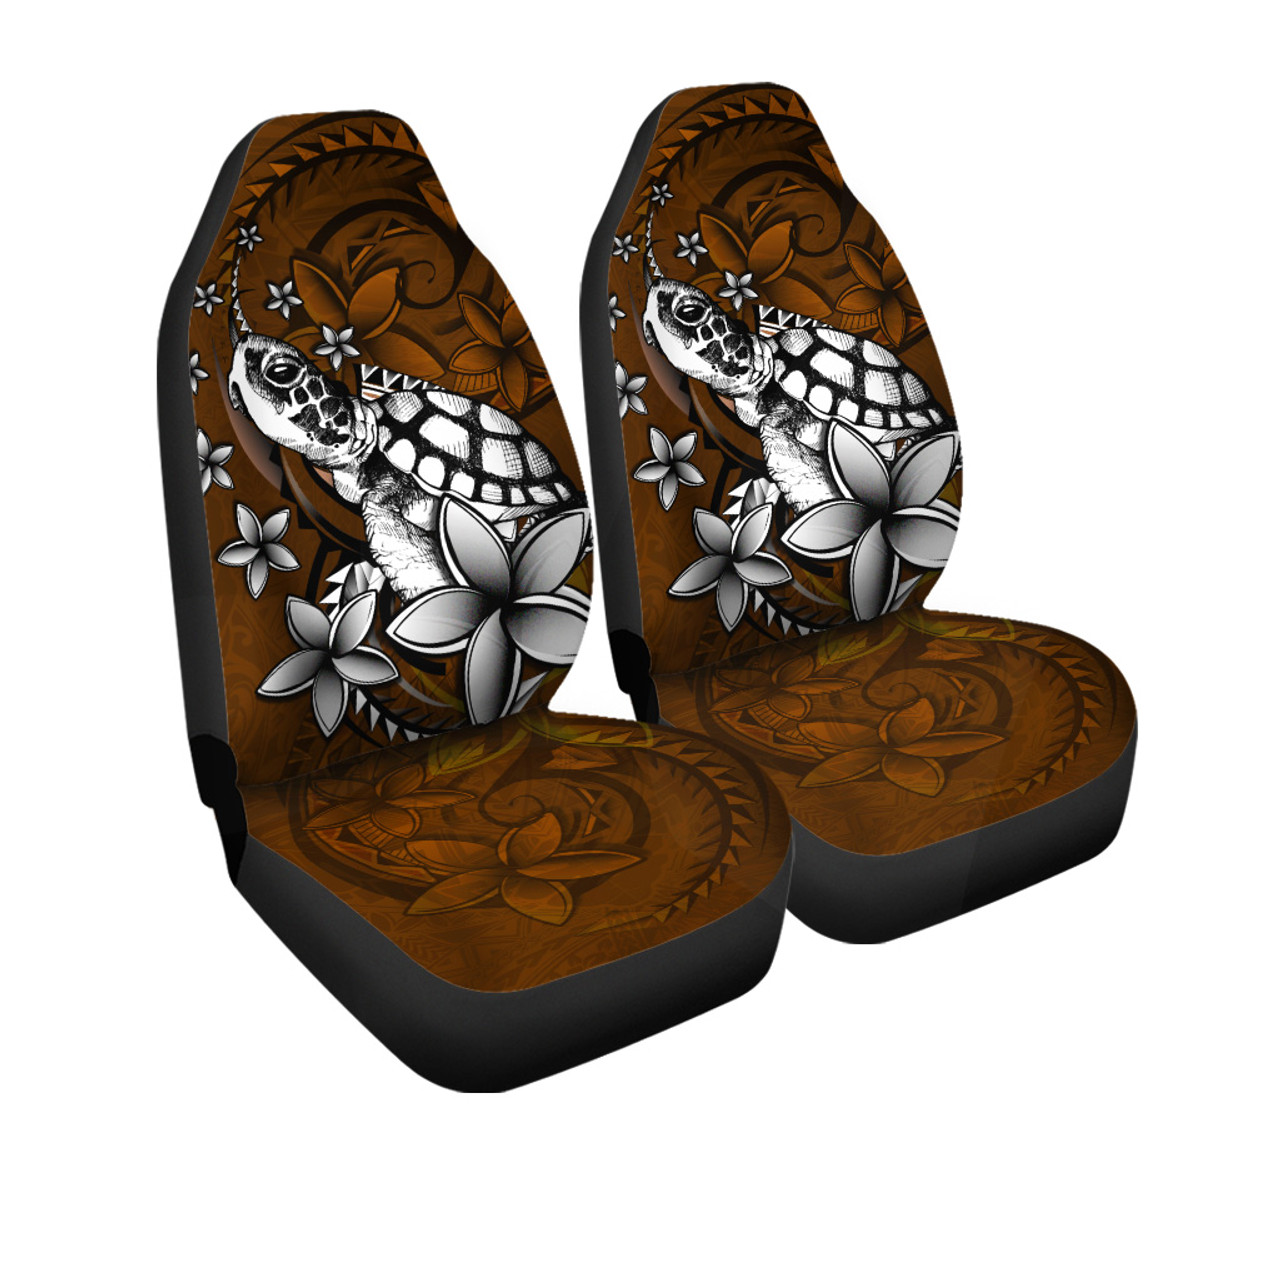 Hawaii Car Seat Covers Sea Turtle With Plumeria Polynesian Patterns Retro Style